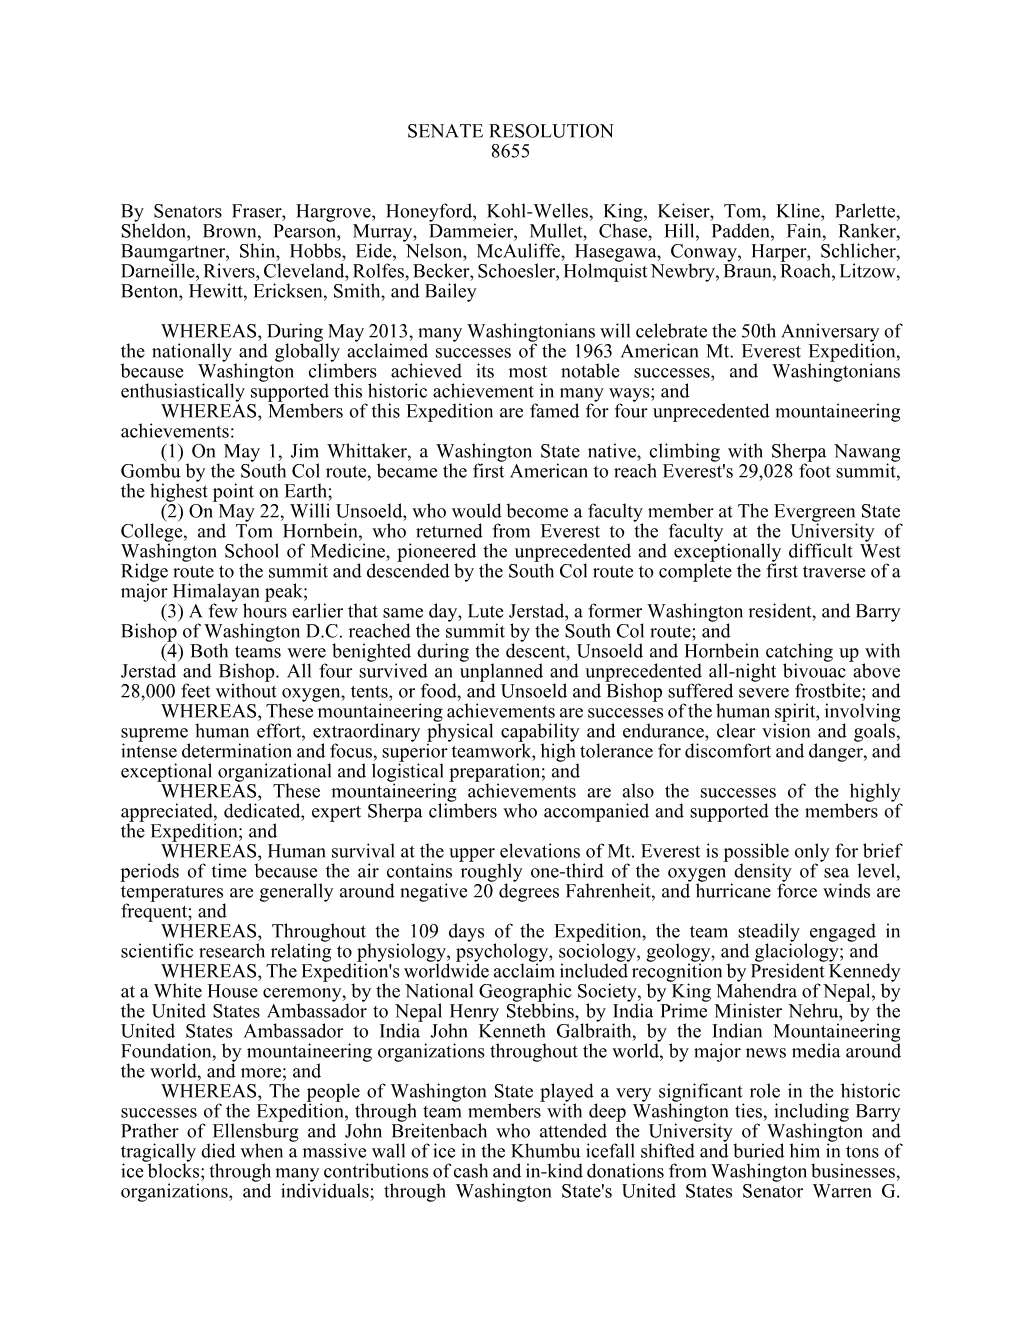 SENATE RESOLUTION 8655 by Senators Fraser, Hargrove